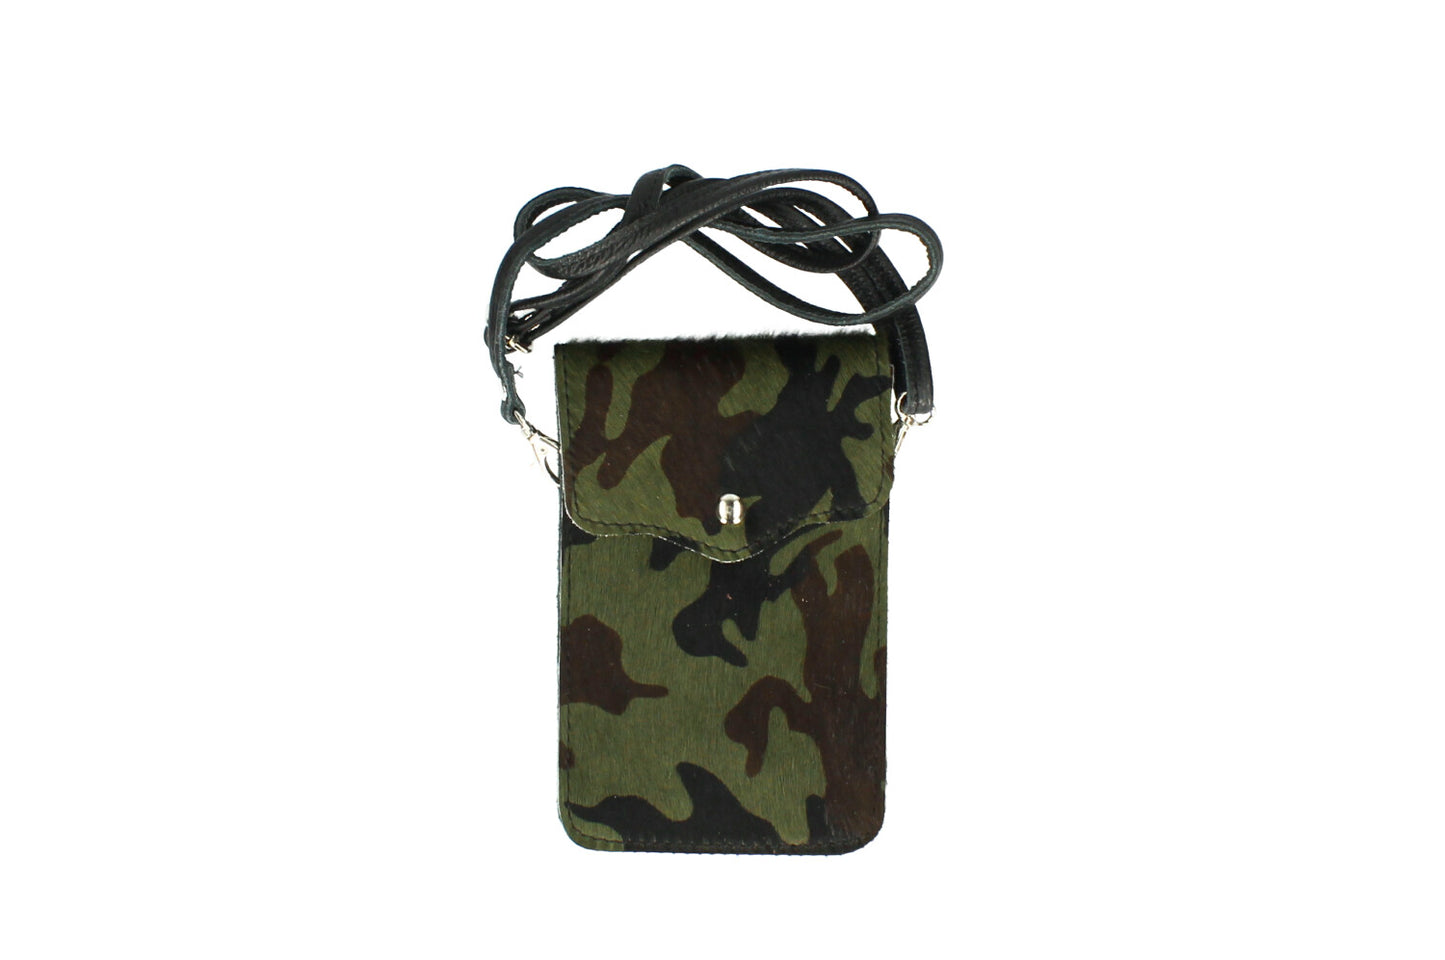 The Leather Cross Body Mobile Phone Bag (Animal print)